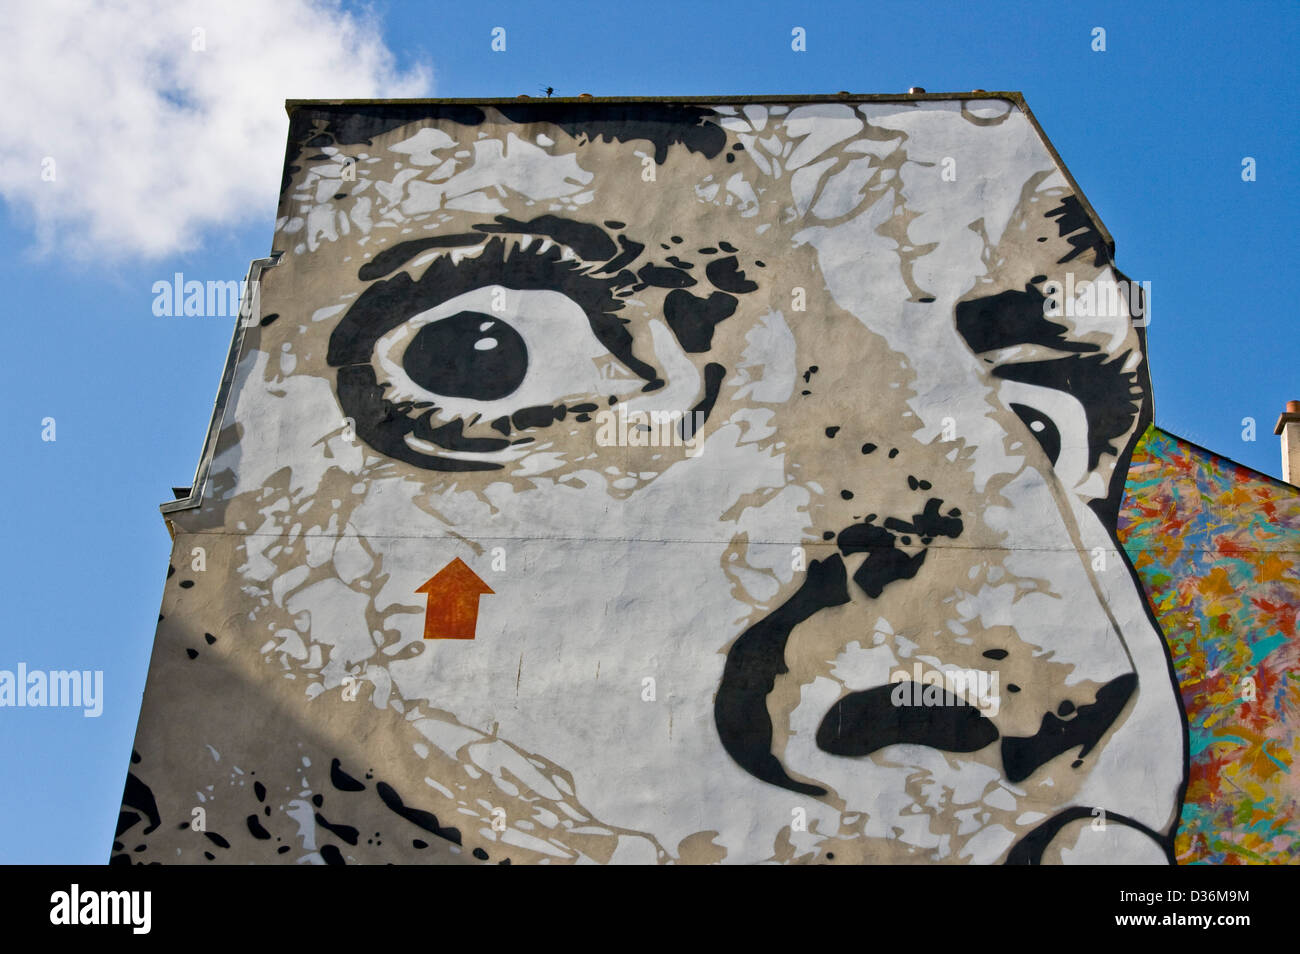 Riesigen Graffiti Streetart von Jef Aerosol Teil der Serie "Big Walls" Ort Strawinsky Paris Frankreich Europa Stockfoto